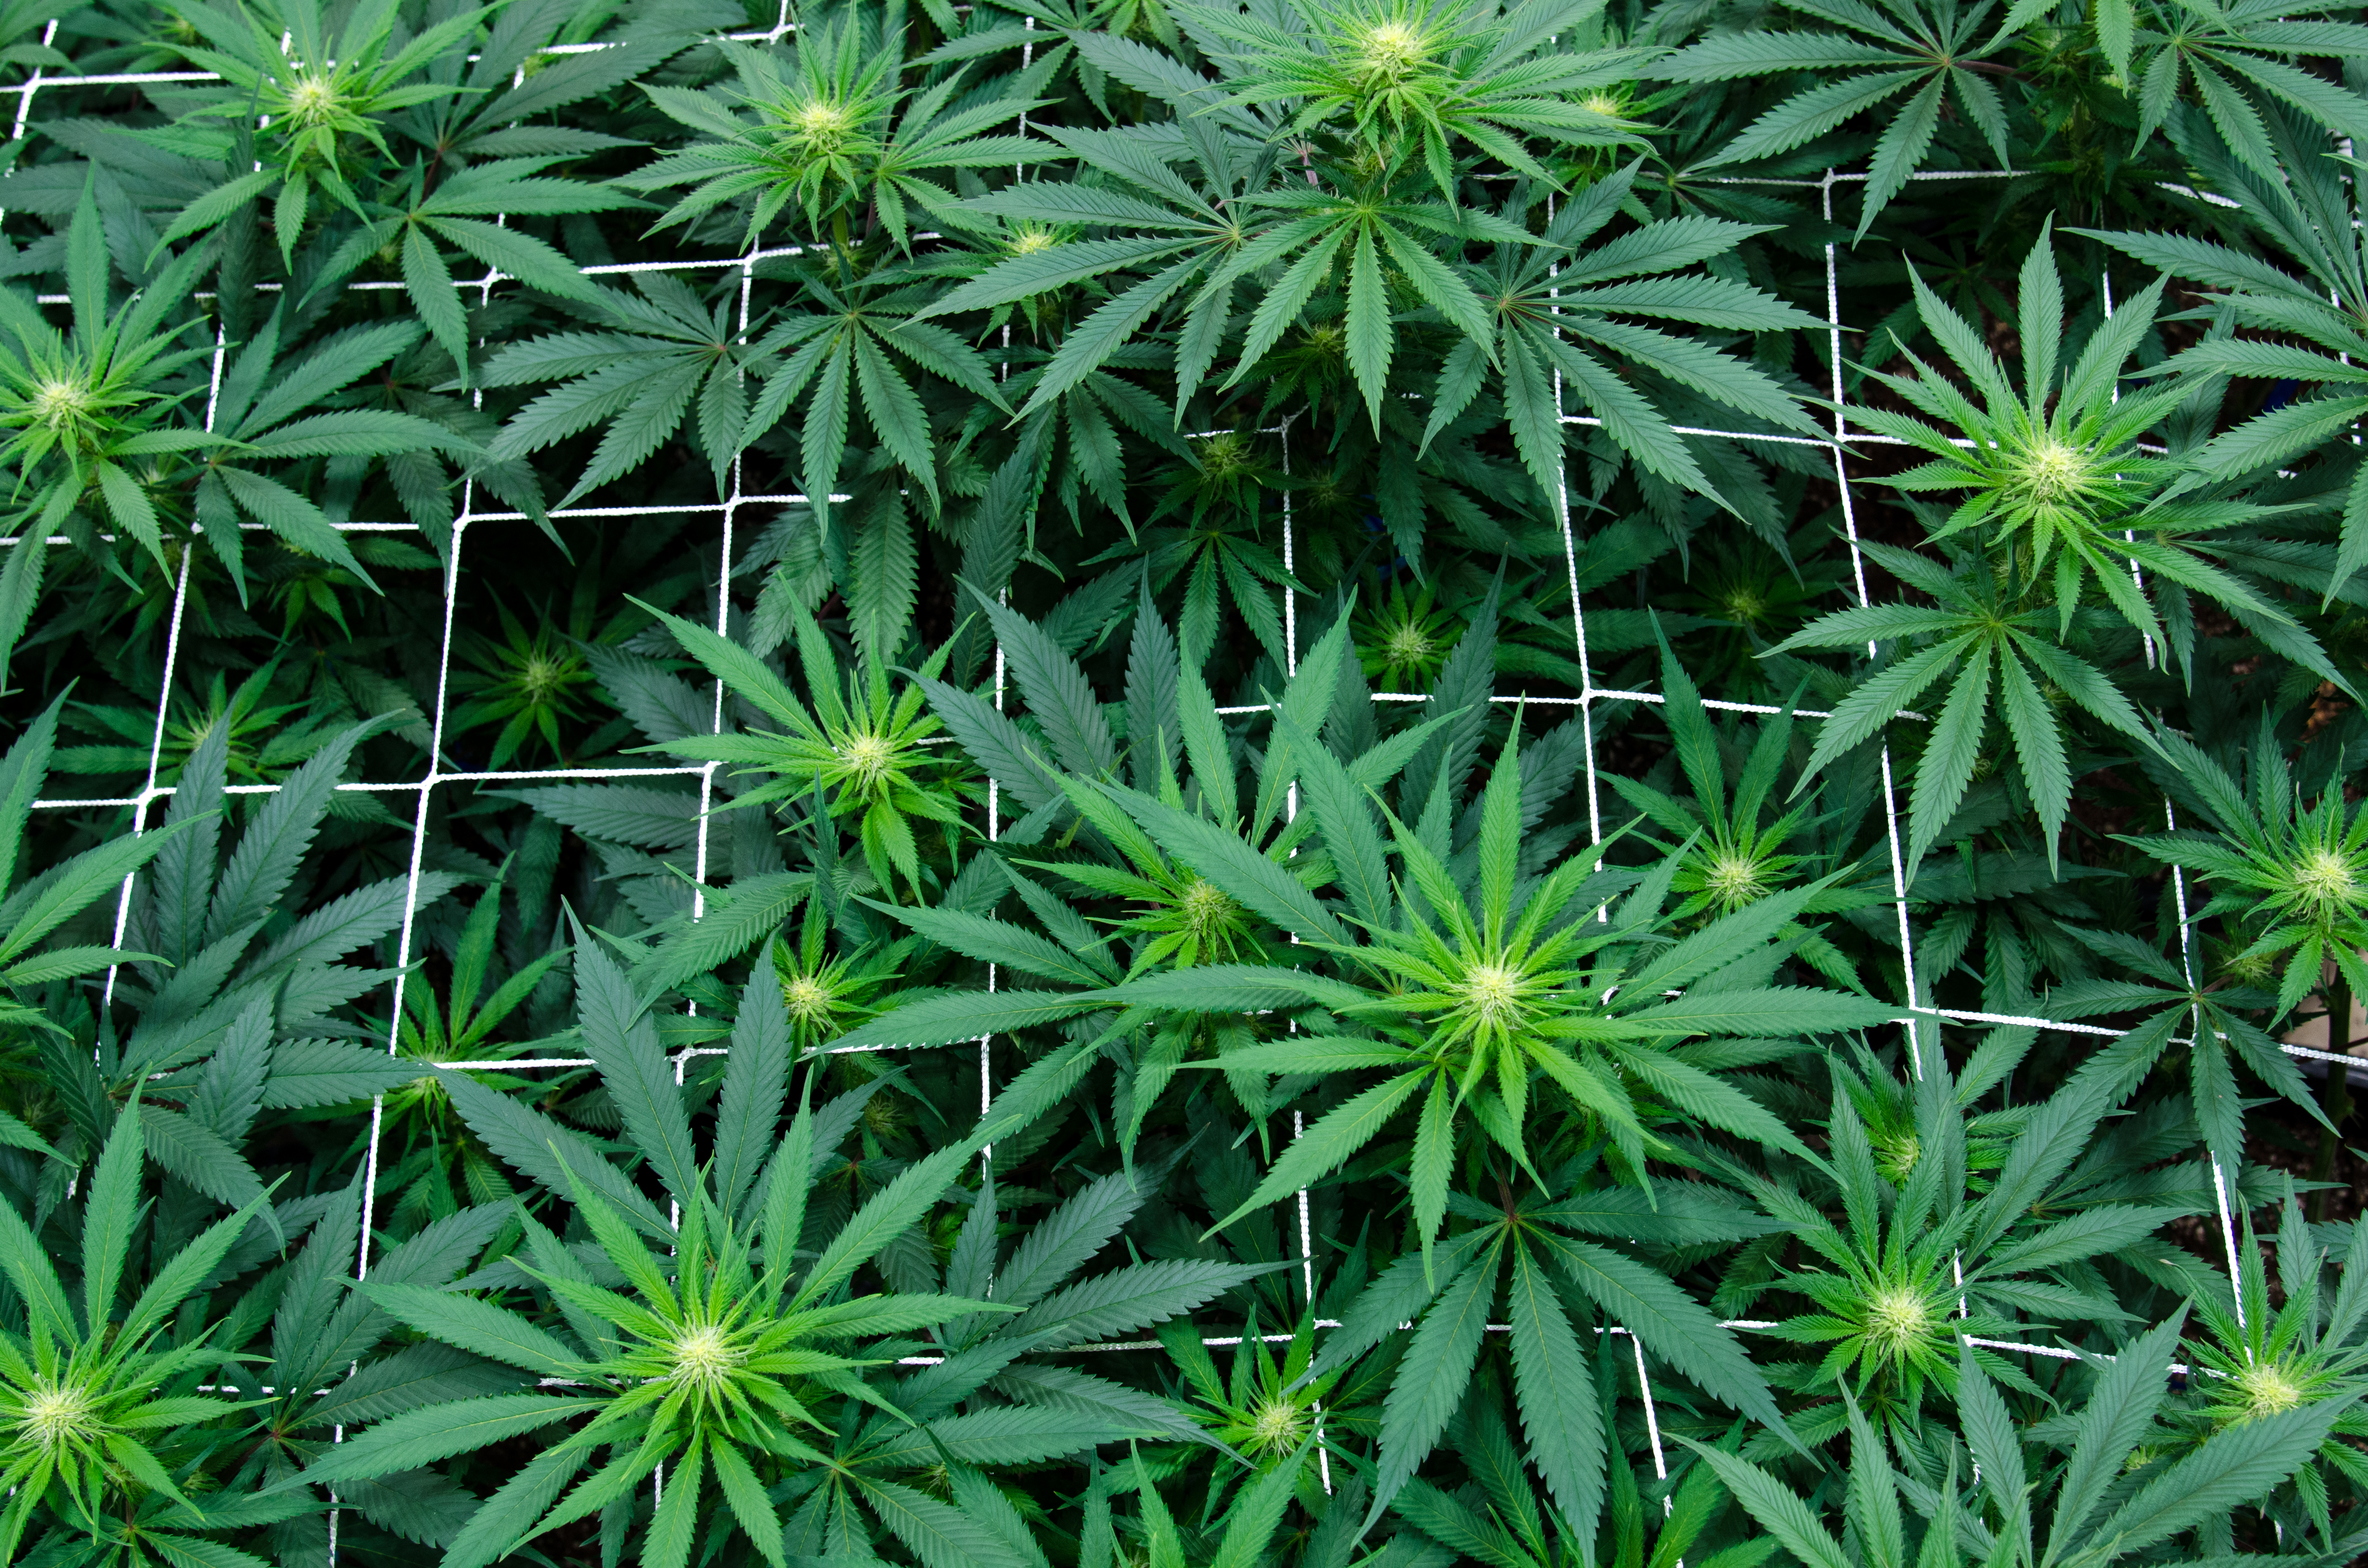 Greenery Grown hand-crafted cannabis